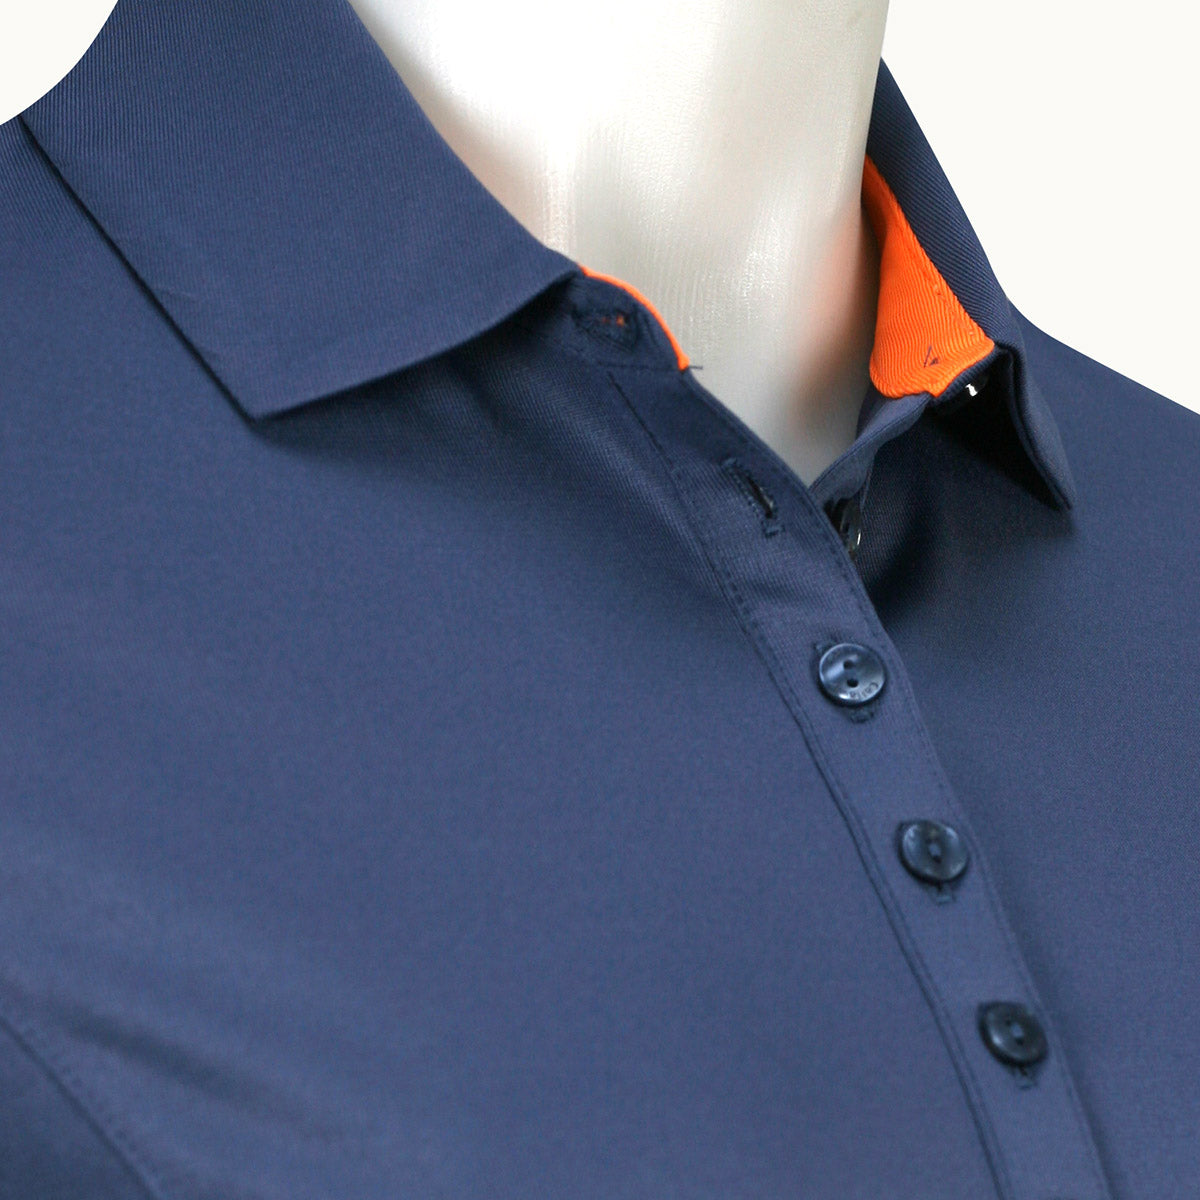 Callaway Ladies Short Sleeve Colorblock Golf Polo in Blue Indigo